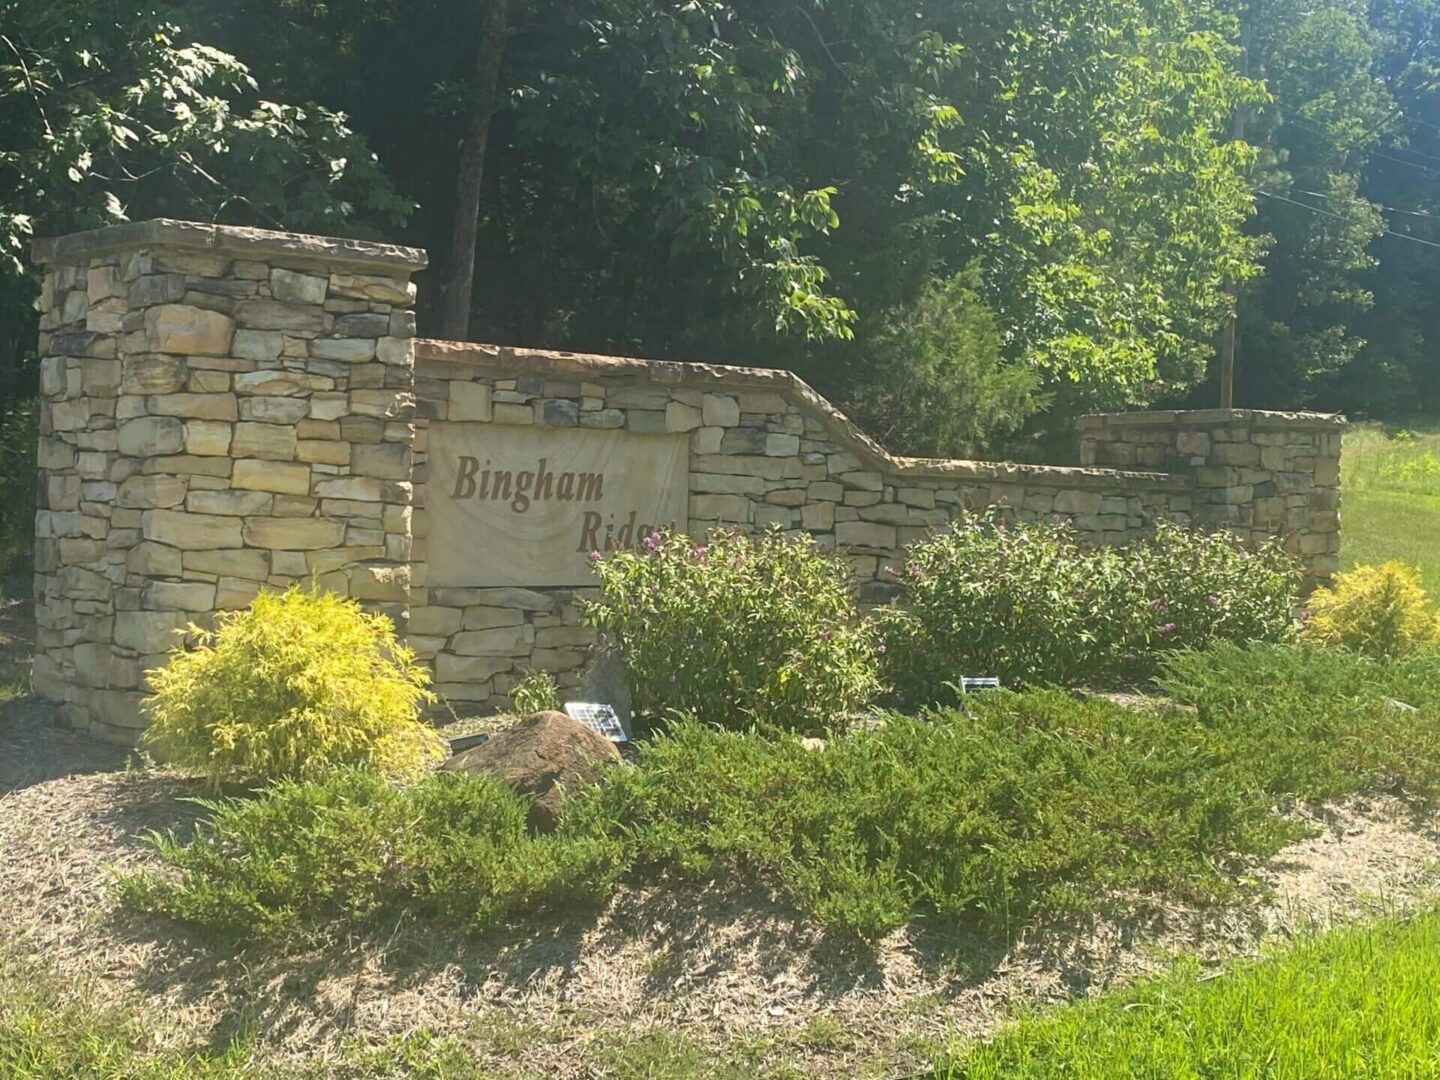 Bingham Ridge Name on a Wall and bushes around